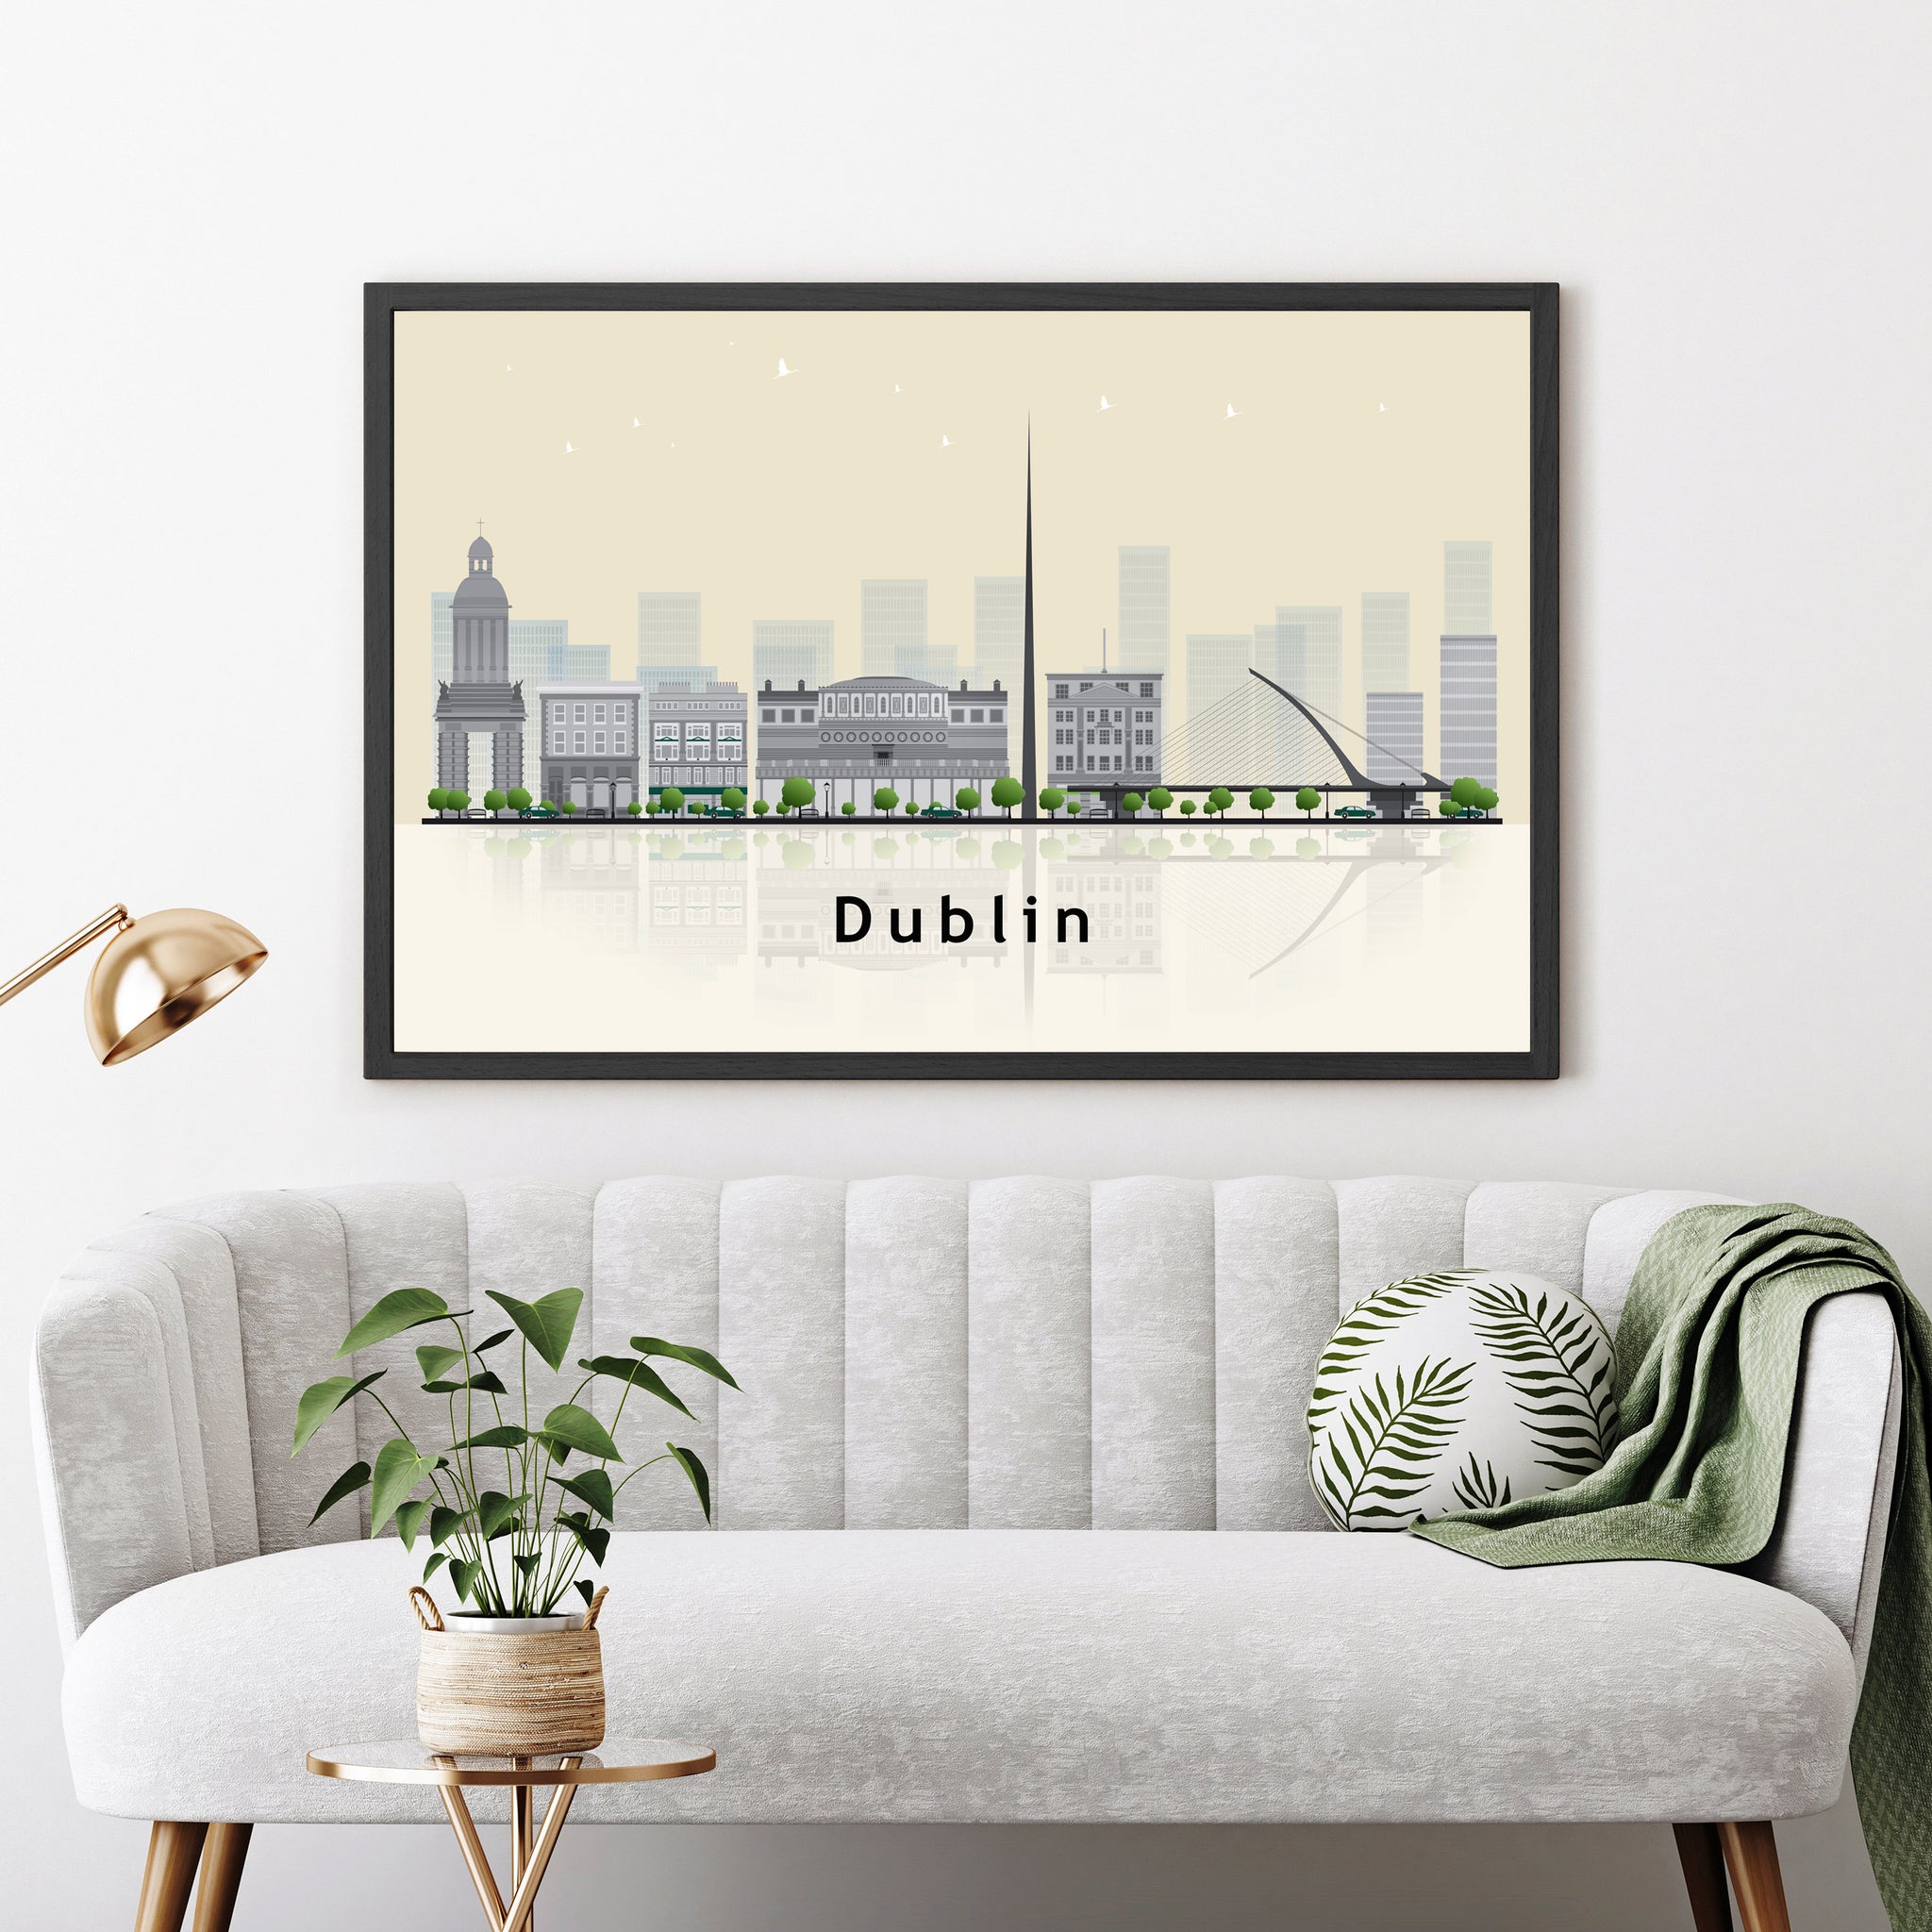 DUBLIN REPUBLIC of Ireland Illustration skyline poster, Modern skyline cityscape poster print, Landmark map poster, Home wall art decoration